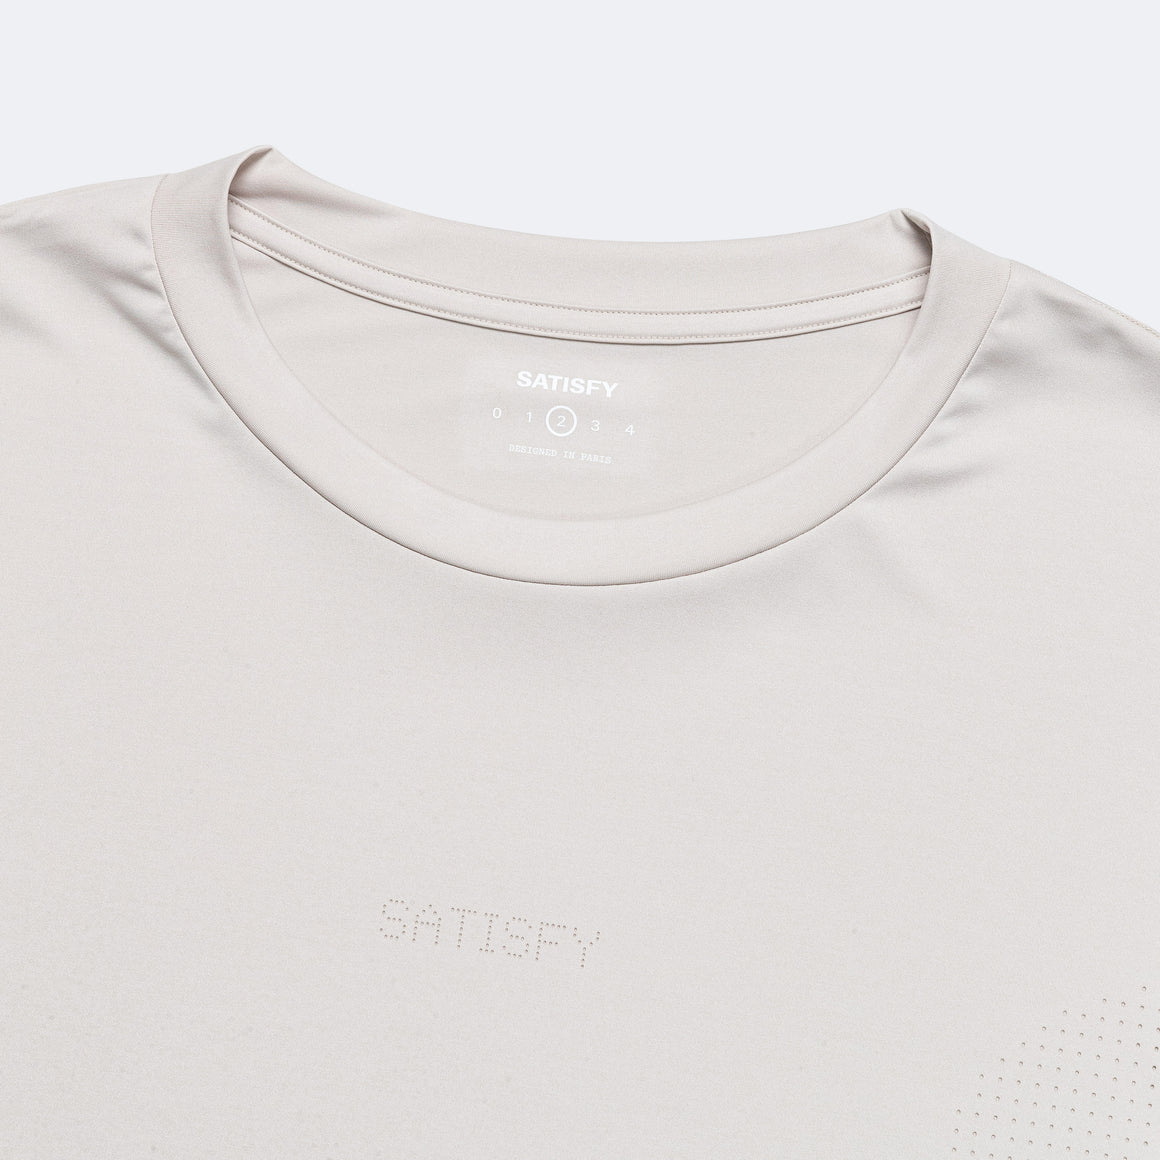 Satisfy - AuraLite™ T-Shirt - Dolomite - Up There Athletics